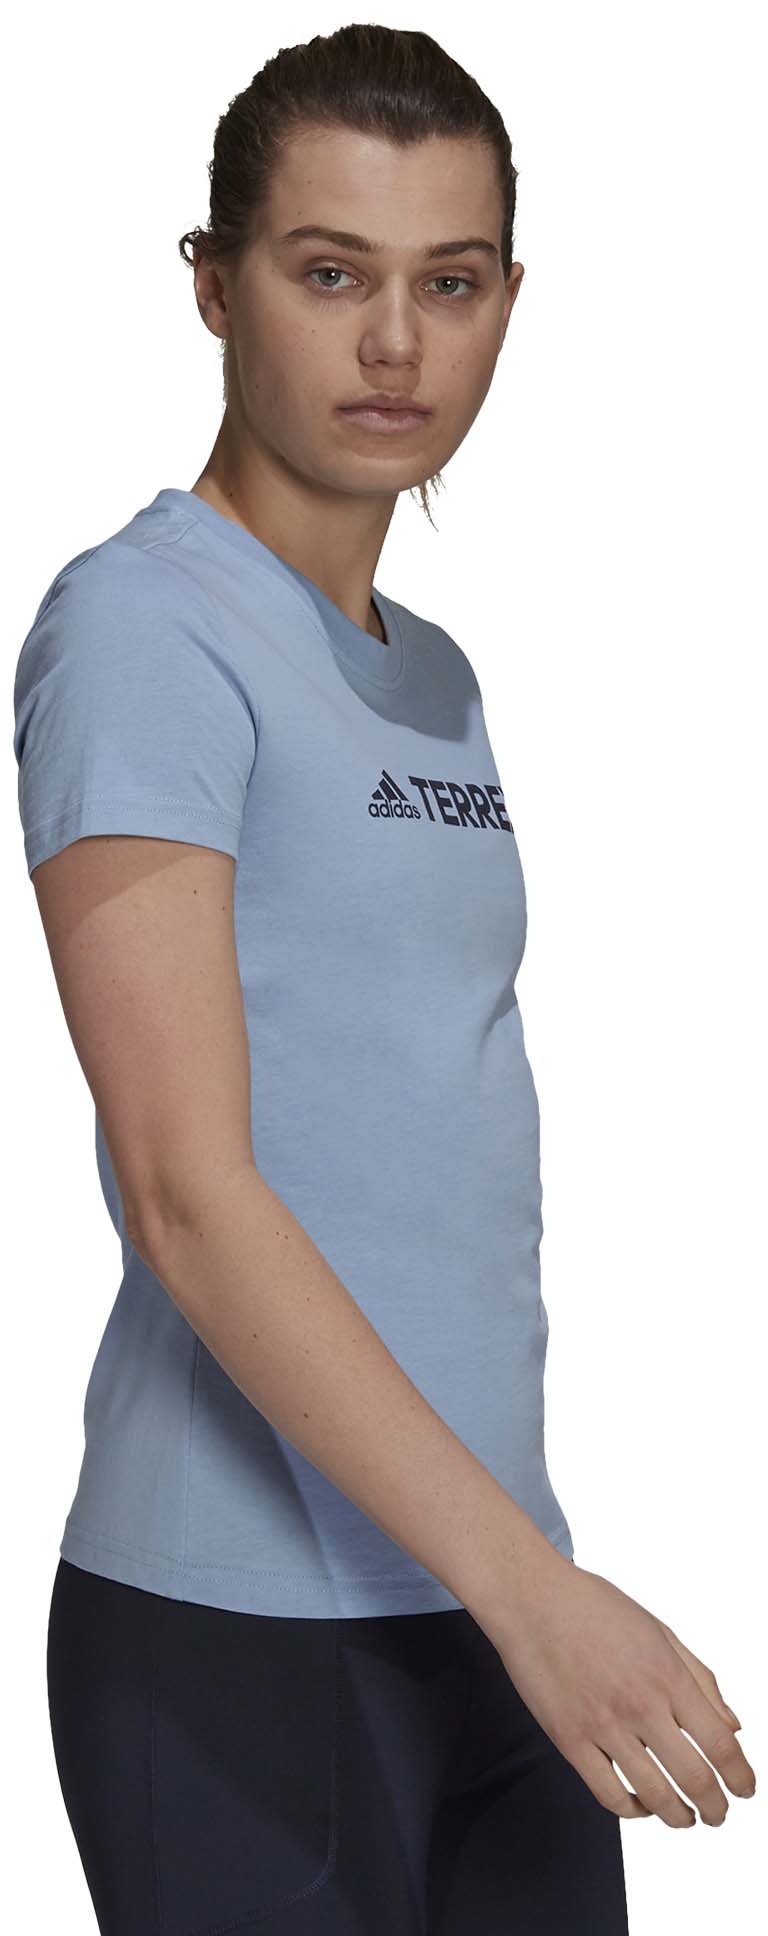 Adidas Terrex Classic Logo Women's T-Shirt